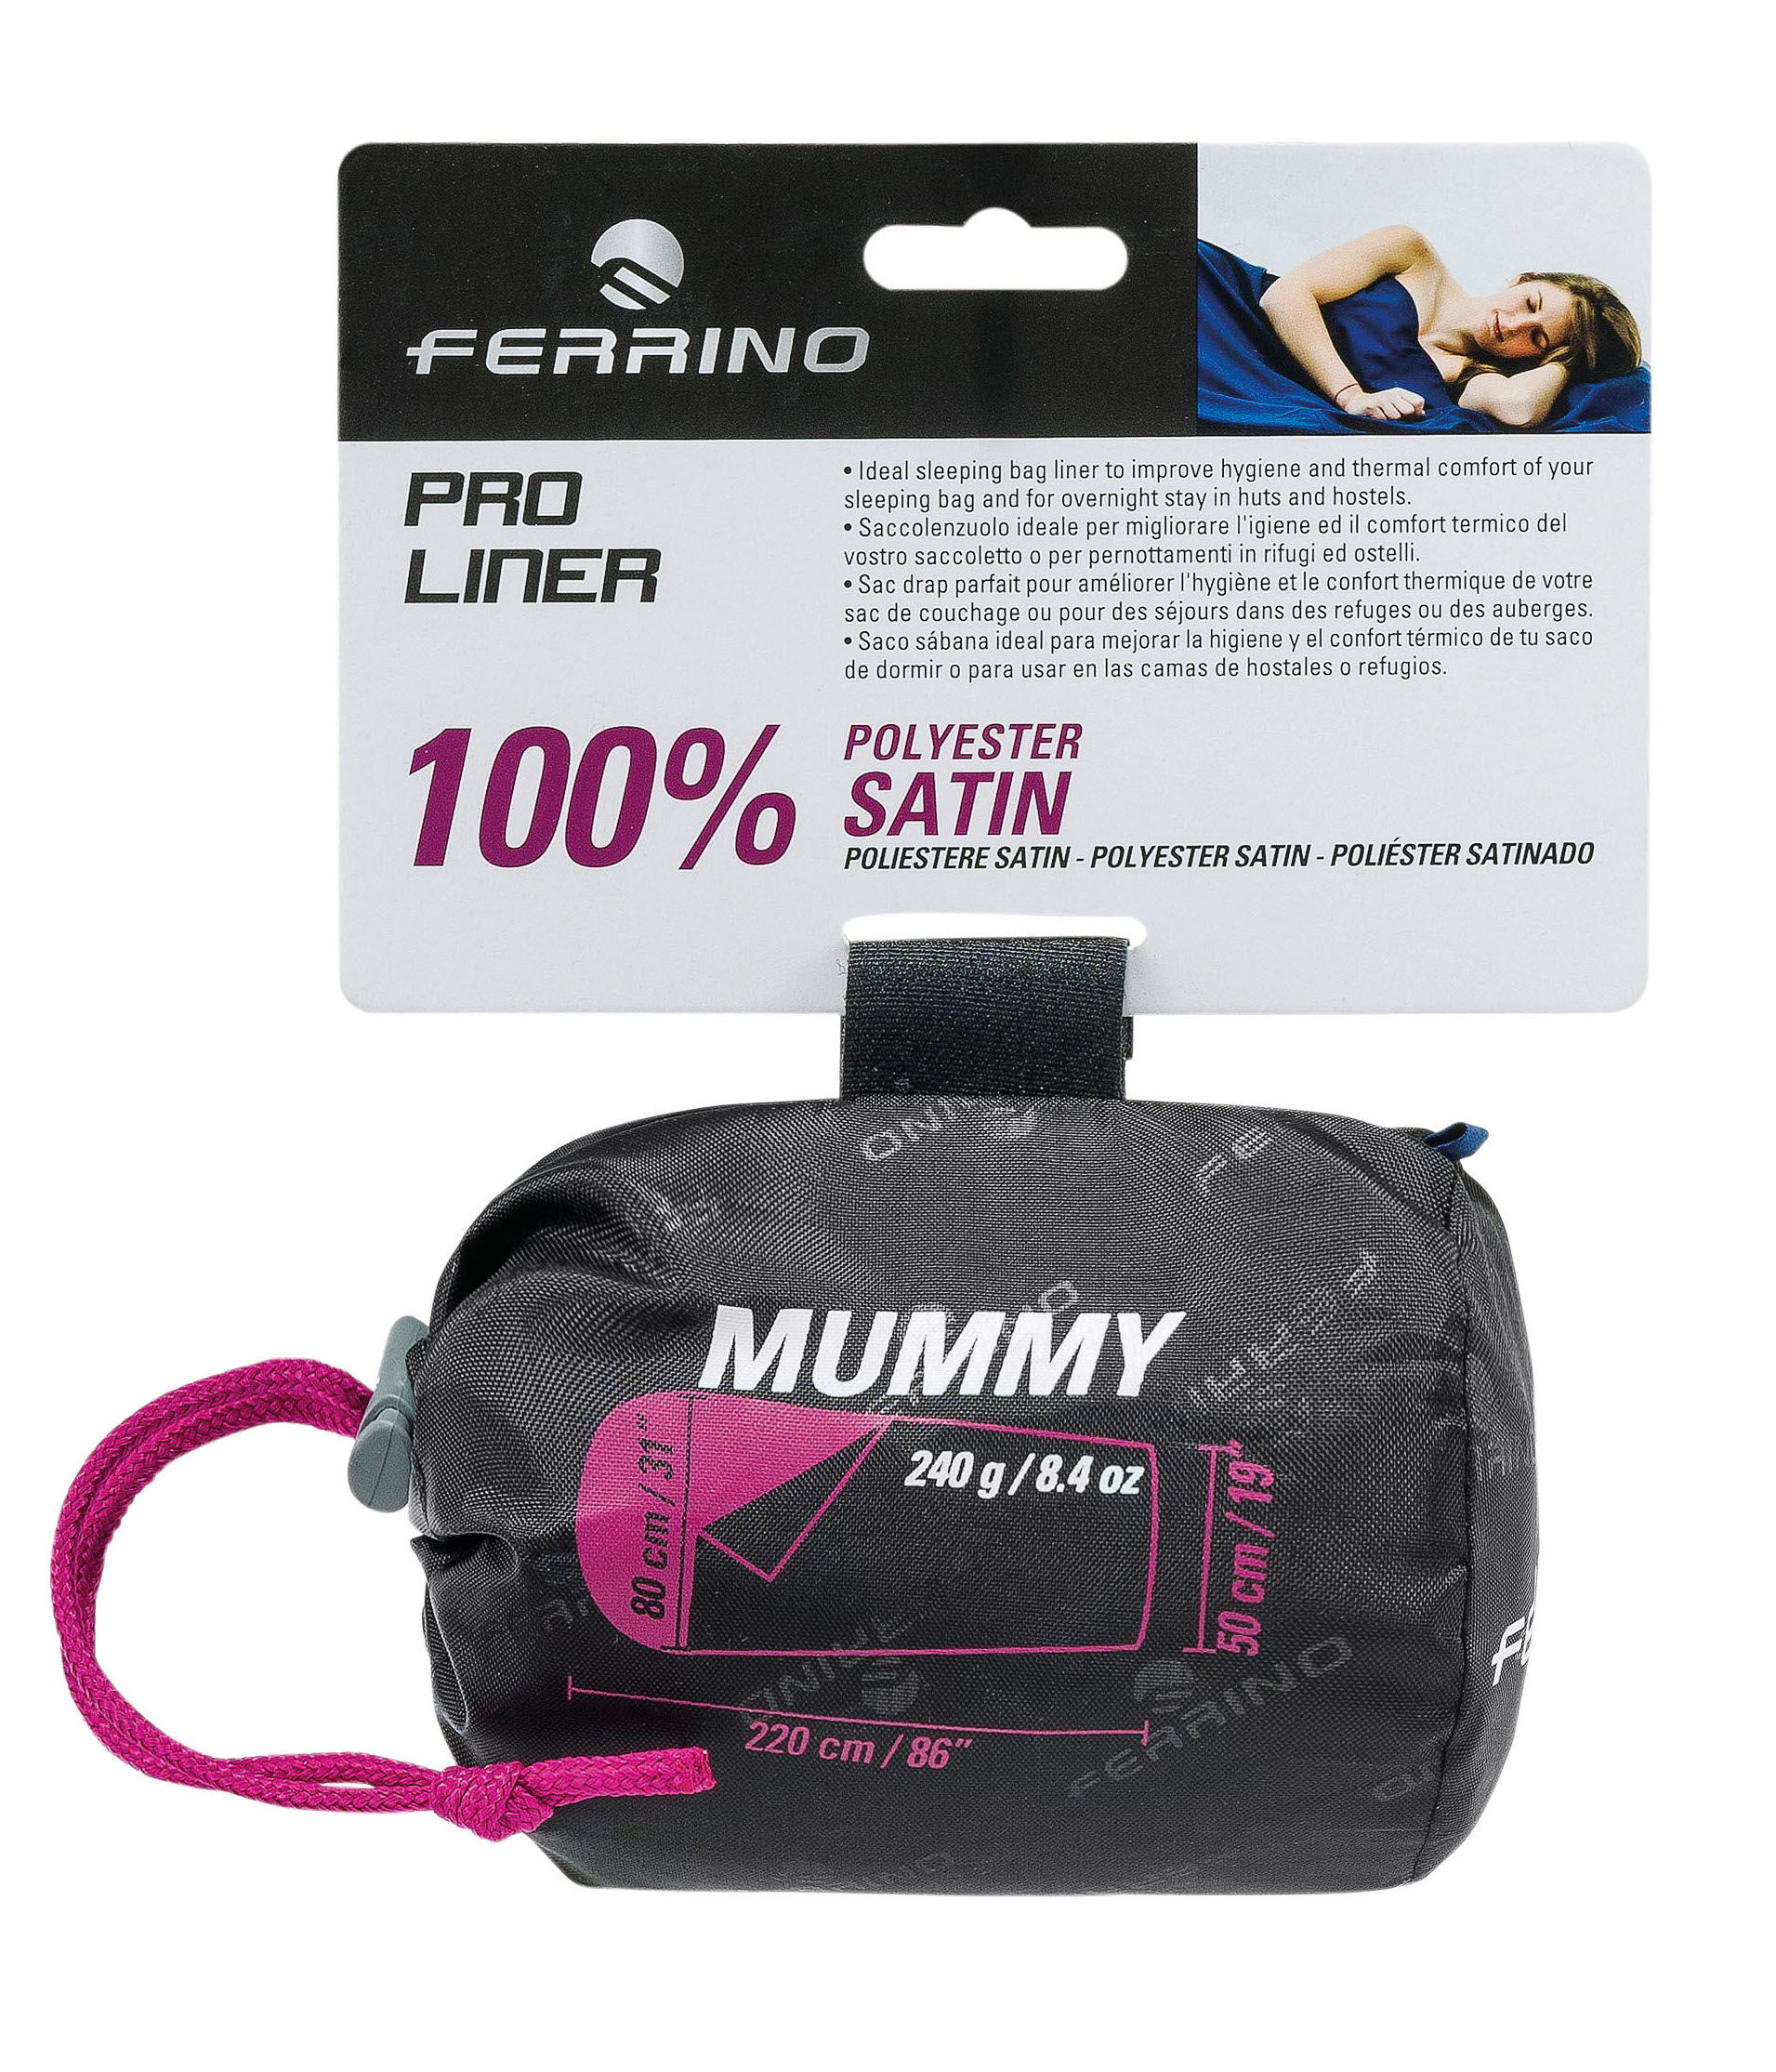 Ferrino - Pro Liner Mummy - Sleeping Bag Liner